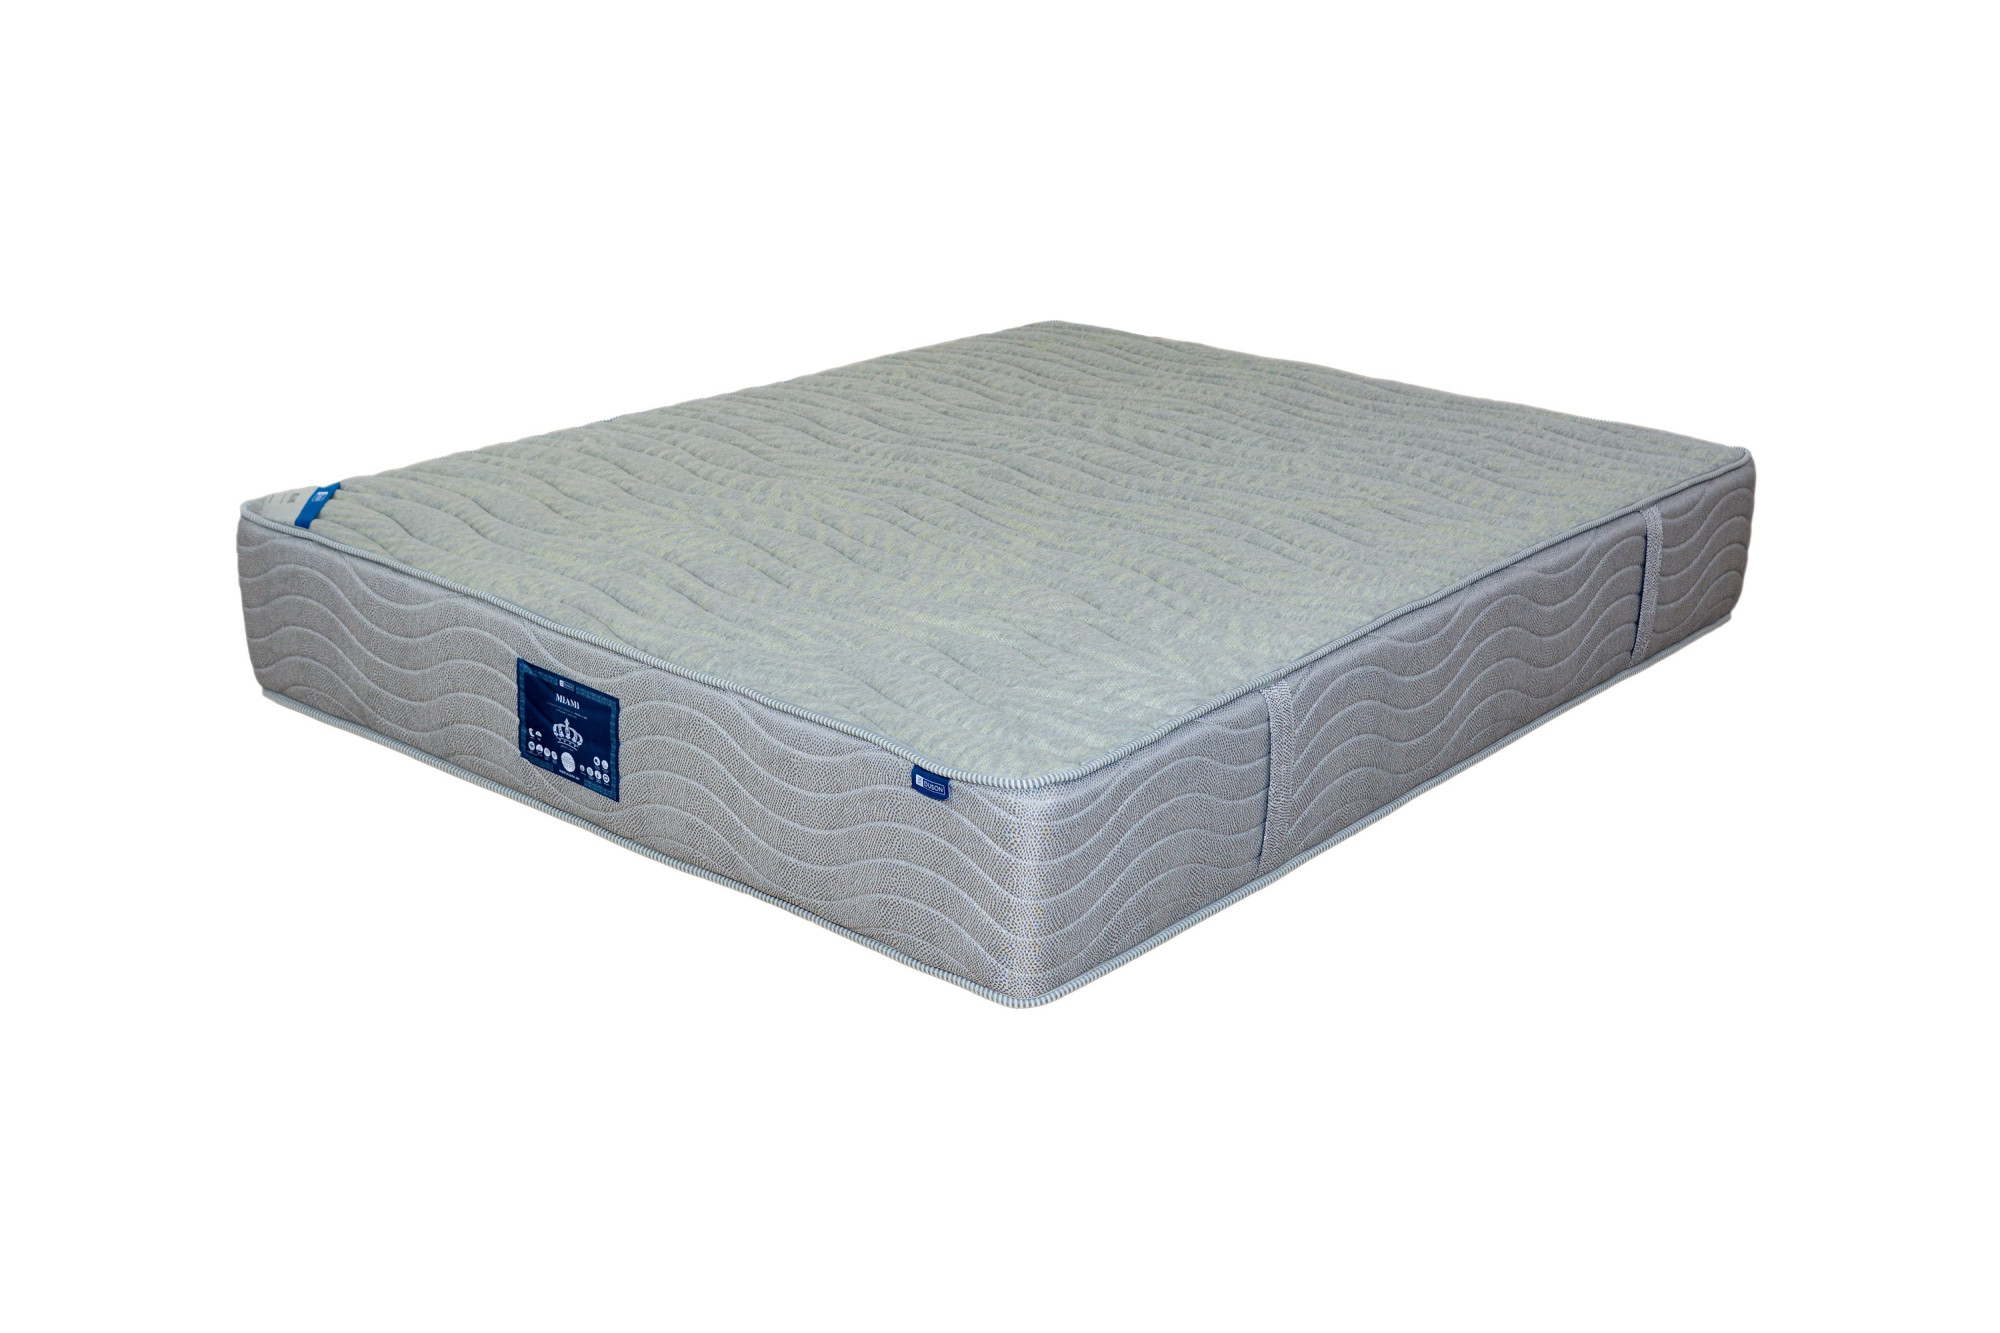 Orthopedic mattress Miami Soft-Hard 110x200 hard, 31cm